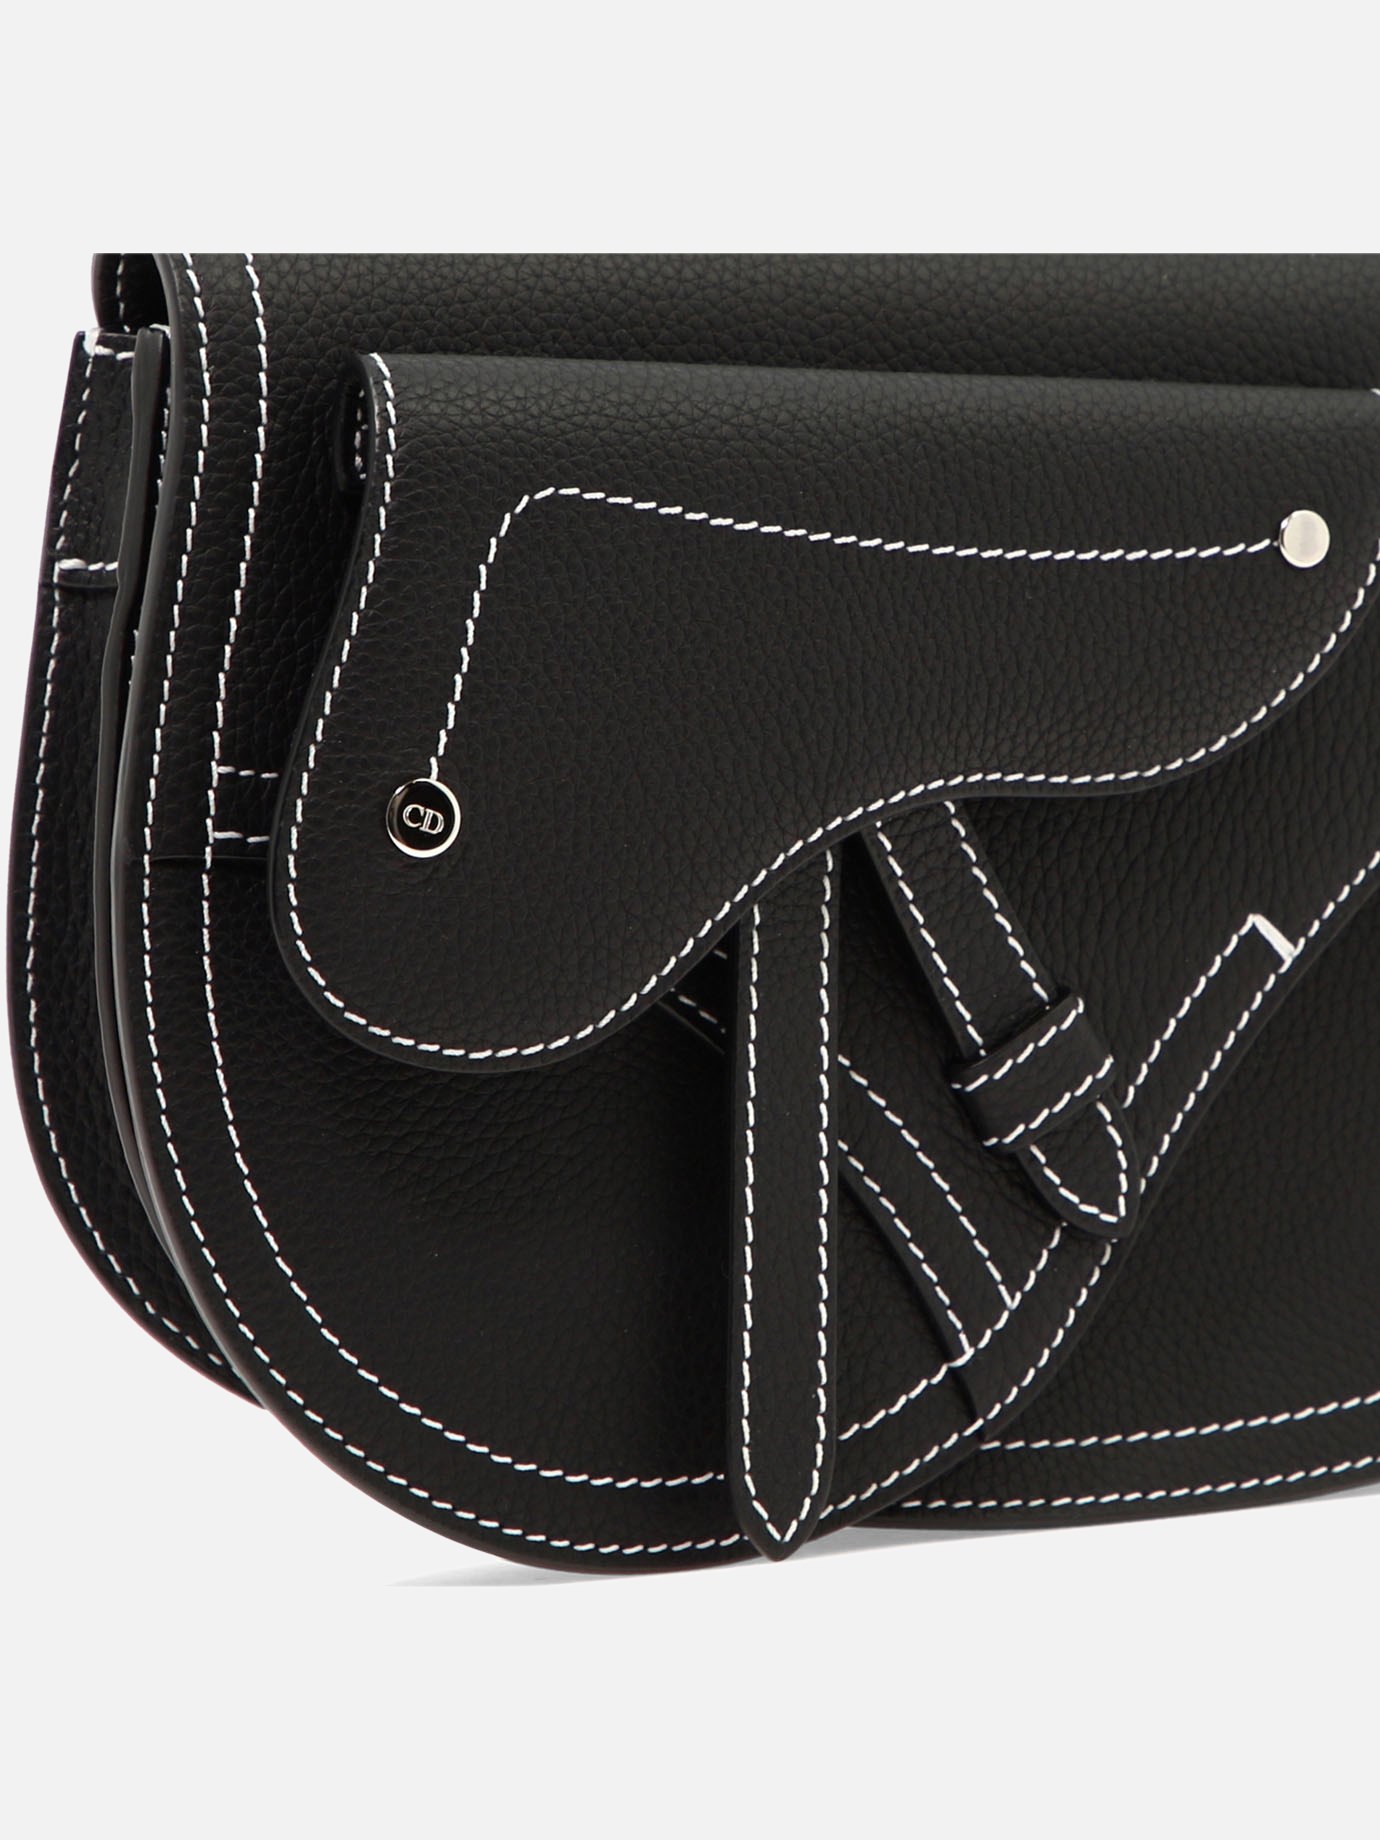  Saddle  crossbody bag by Dior